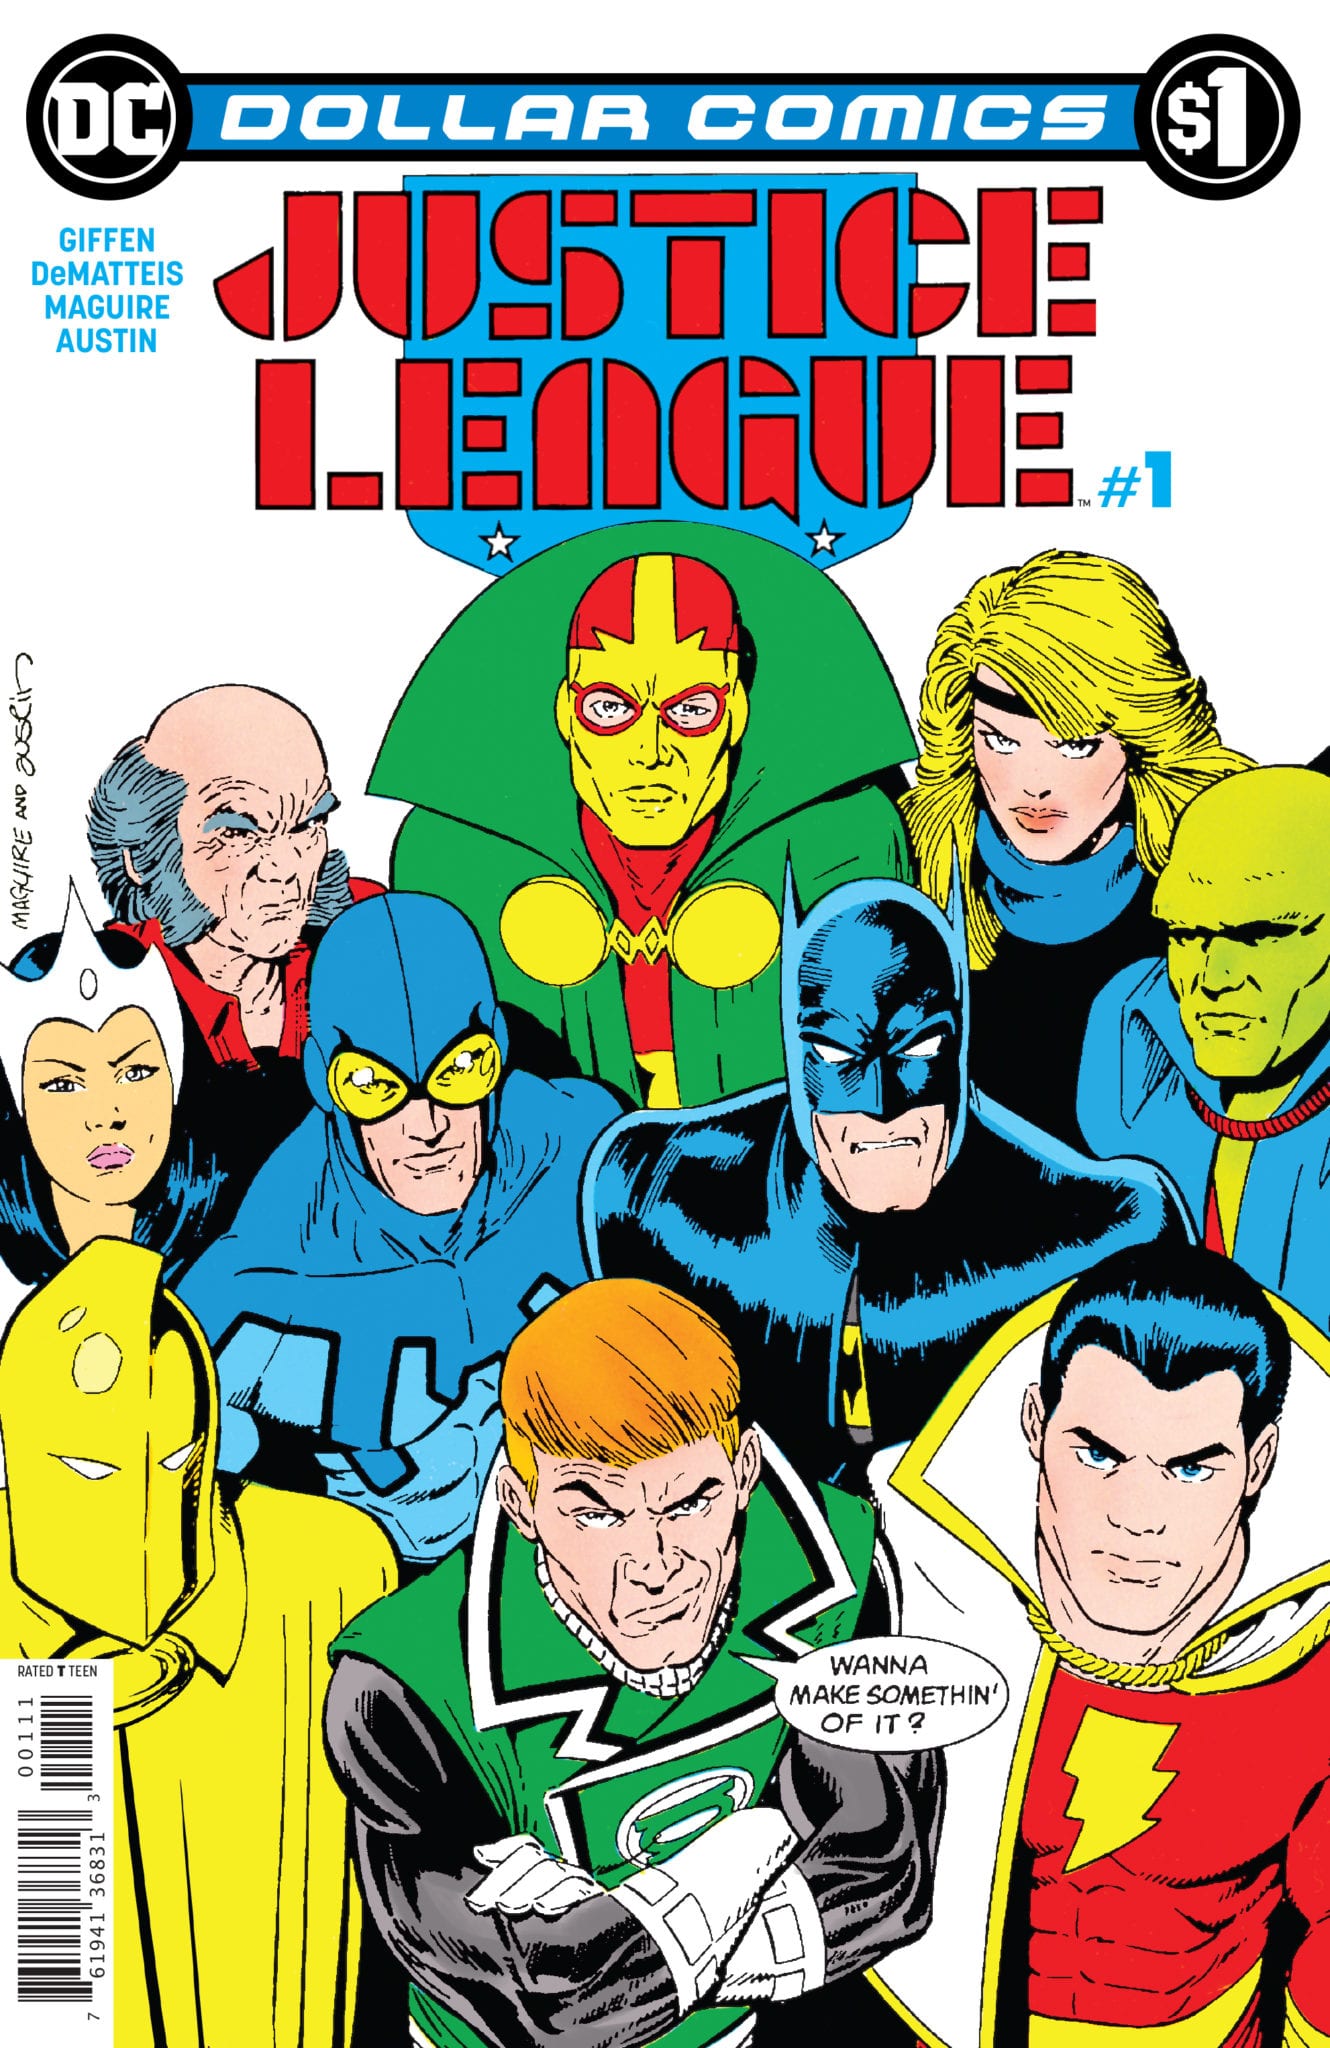 Dollar-Comics-Justice-League-1-1987